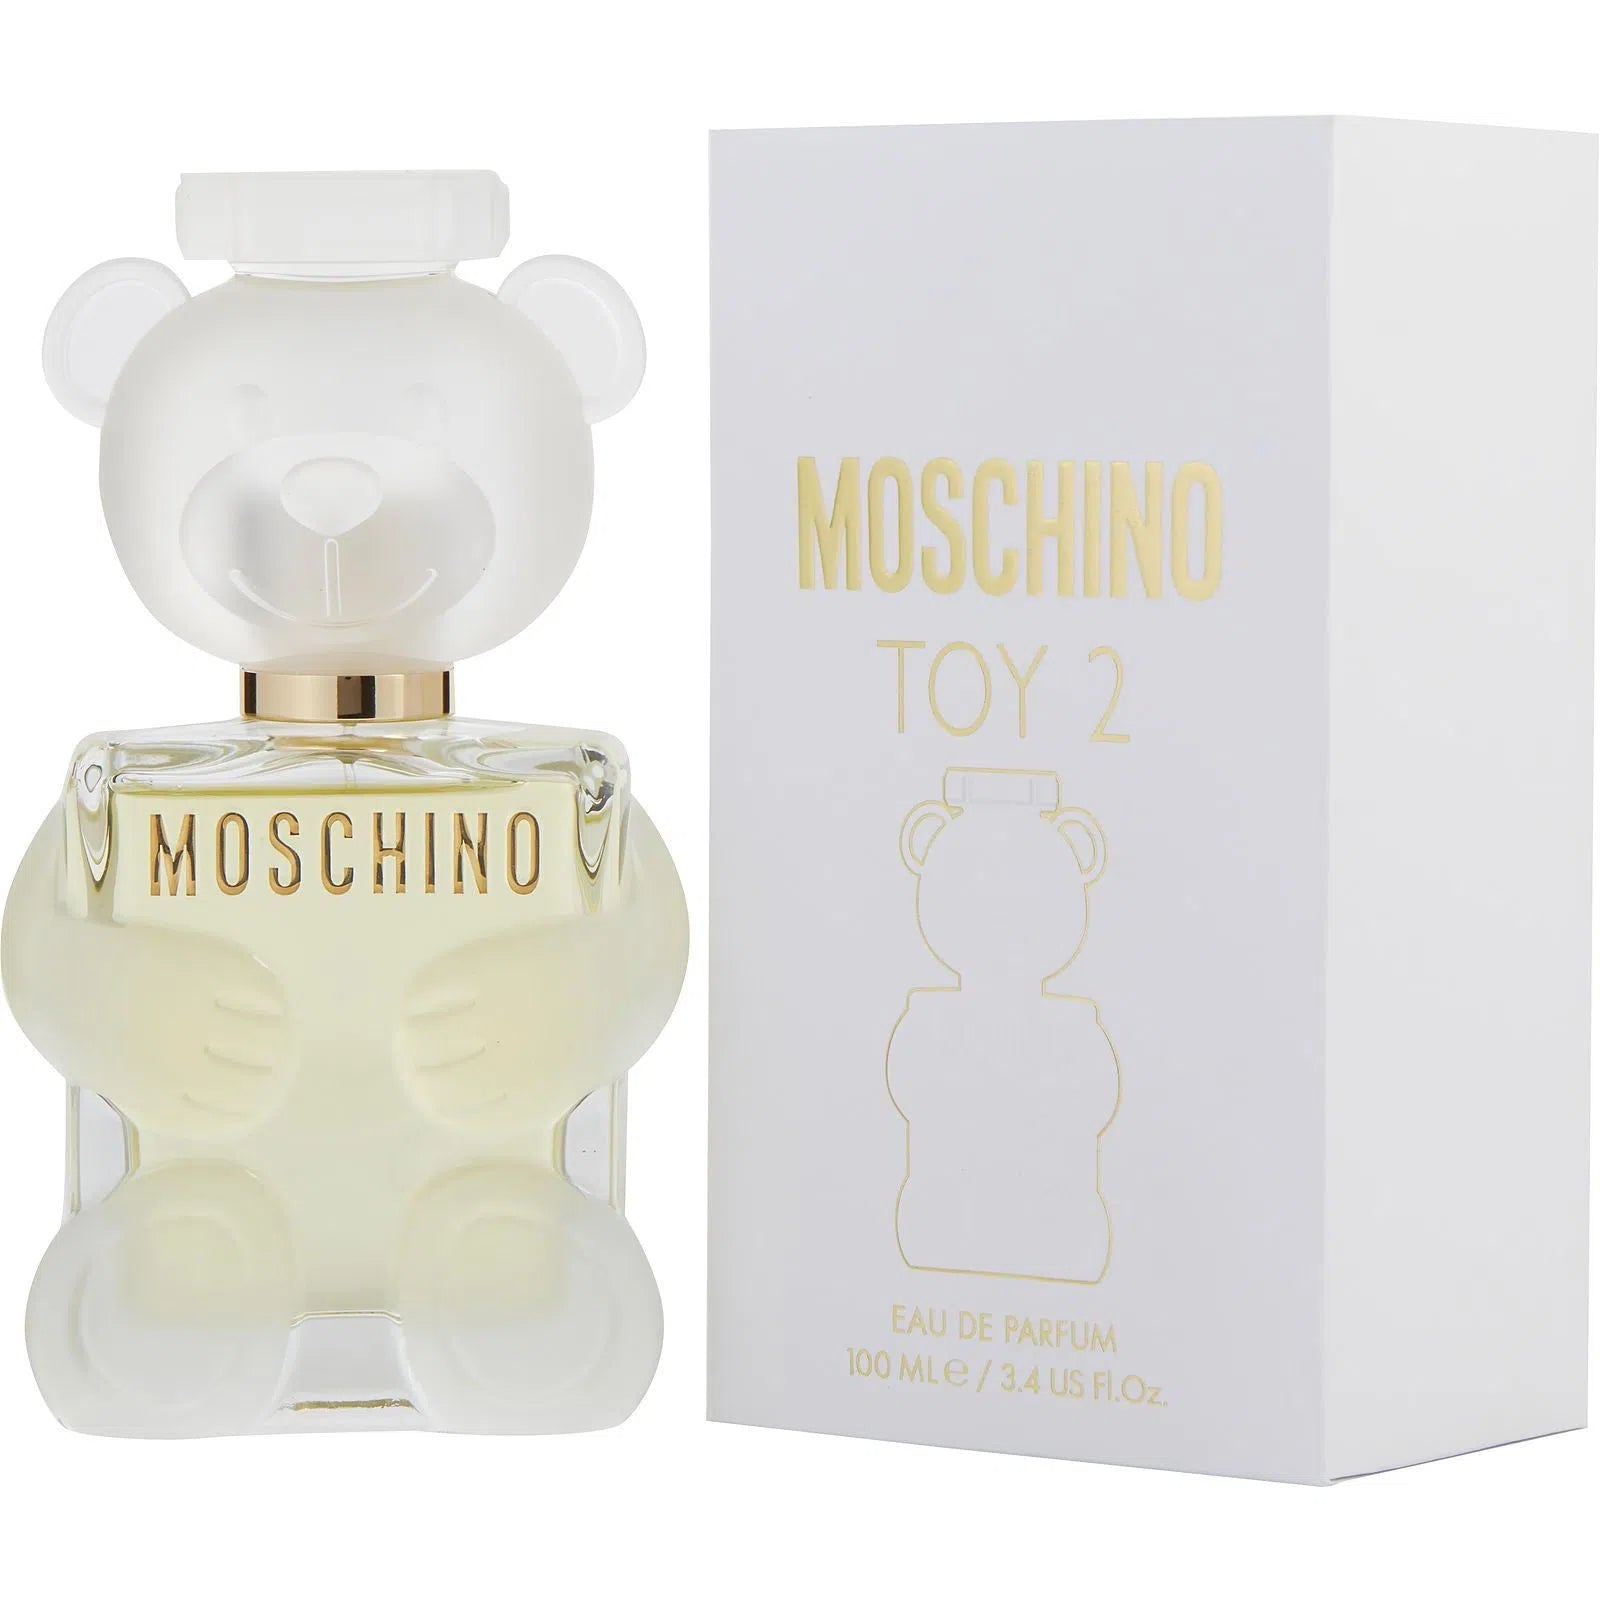 Perfume Moschino Toy 2 EDP (W) / 100 ml - 8011003839308- Prive Perfumes Honduras